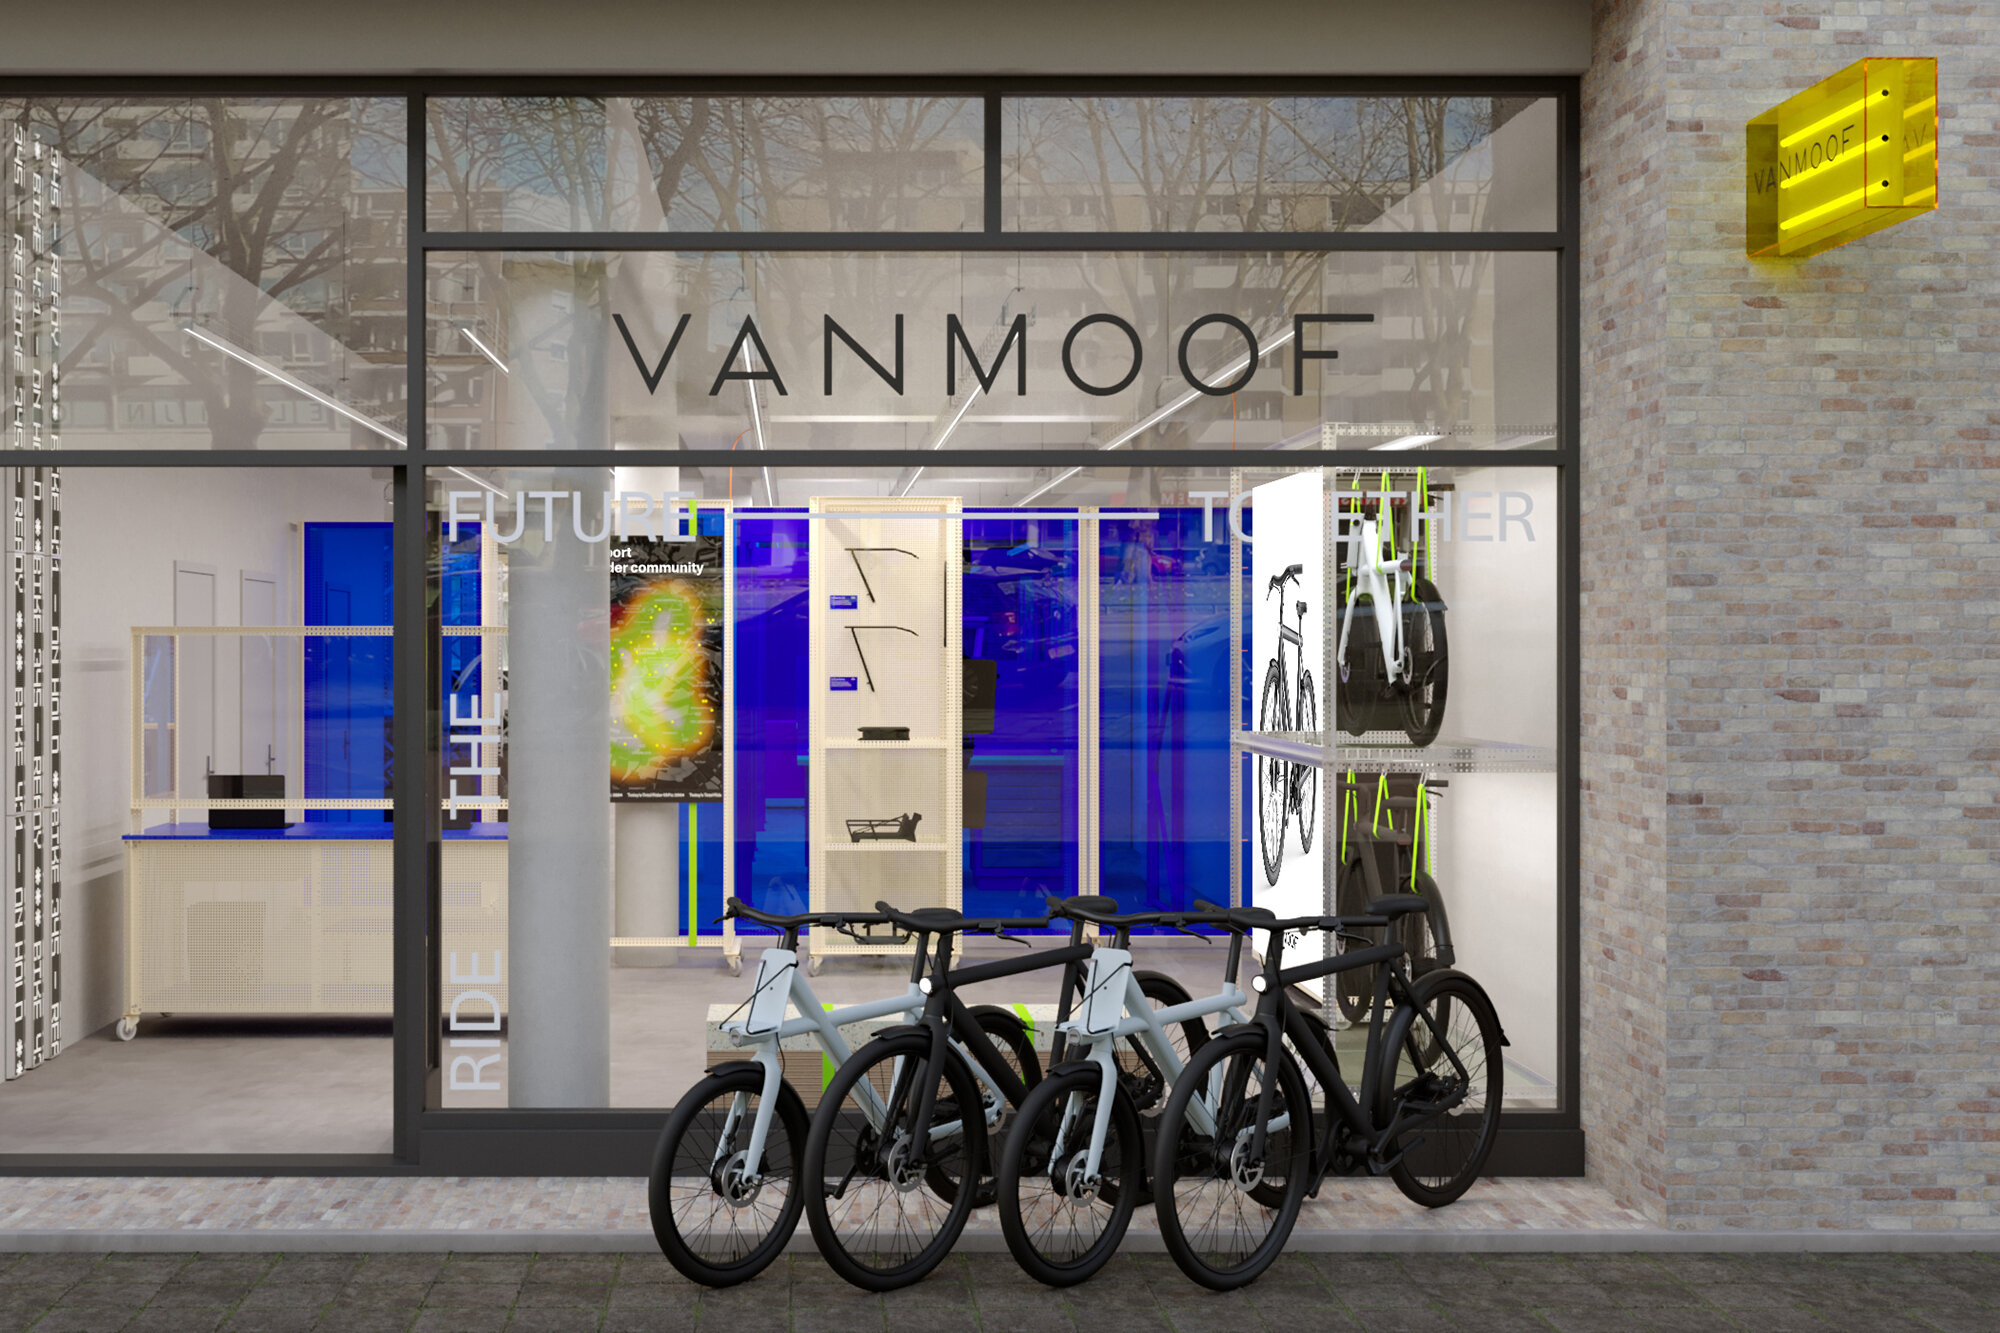 VanMoof's store in Amsterdam